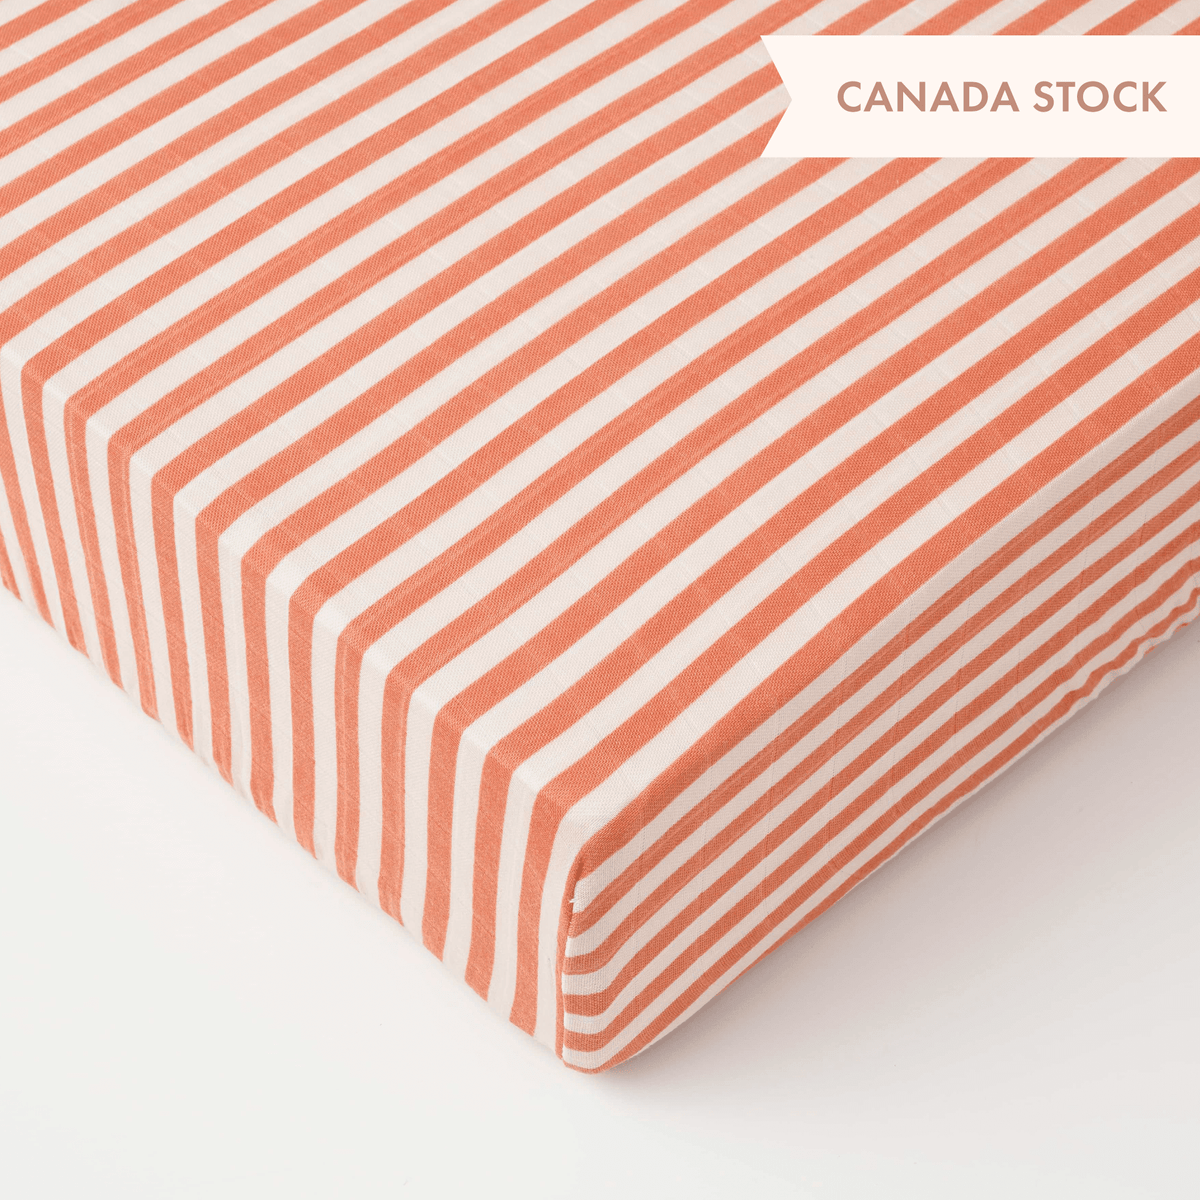 Bassinet Sheet - Stripes - Canada Stock